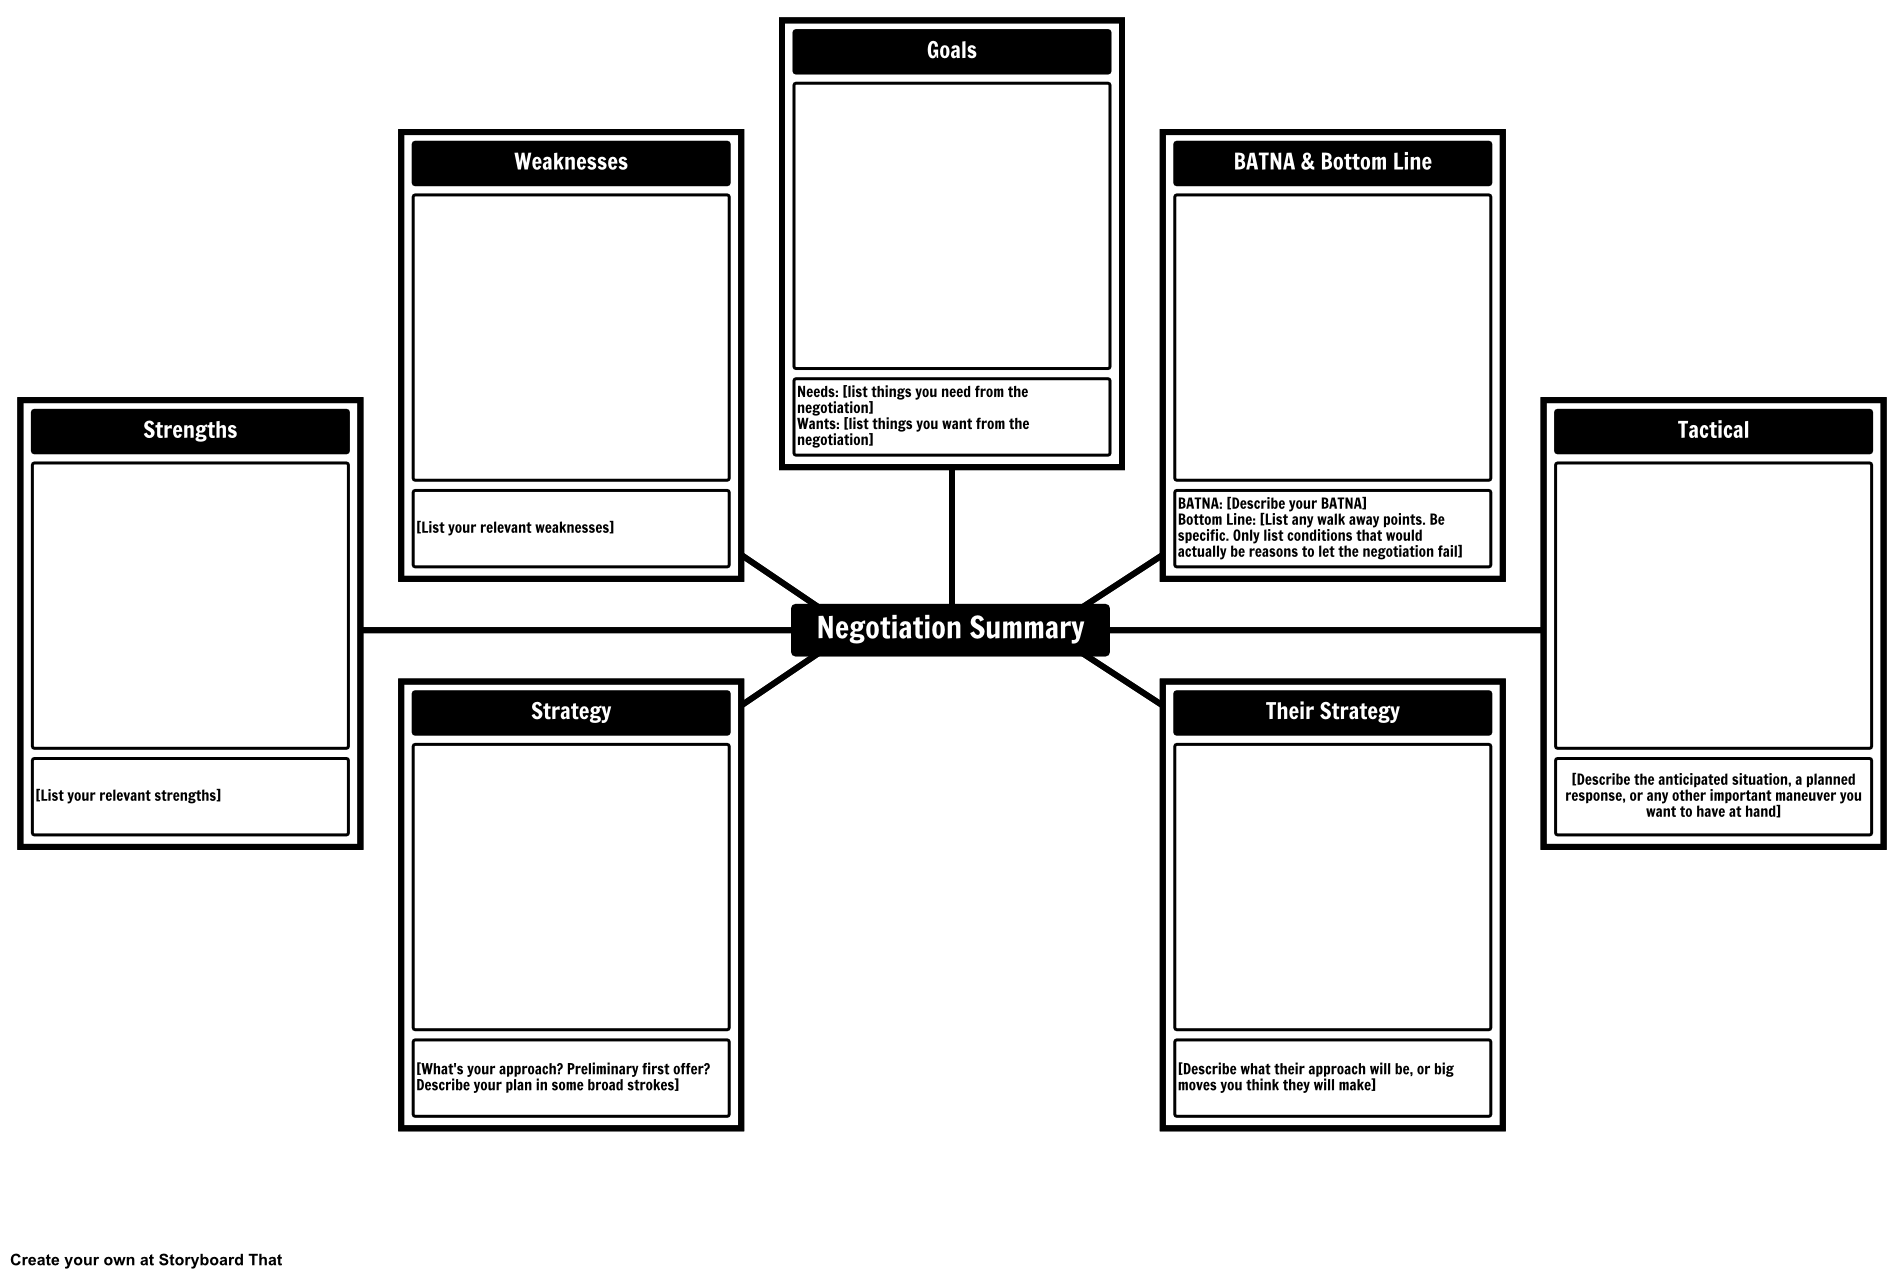 Negotiation Summary Template Storyboard por nathanael okhuysen